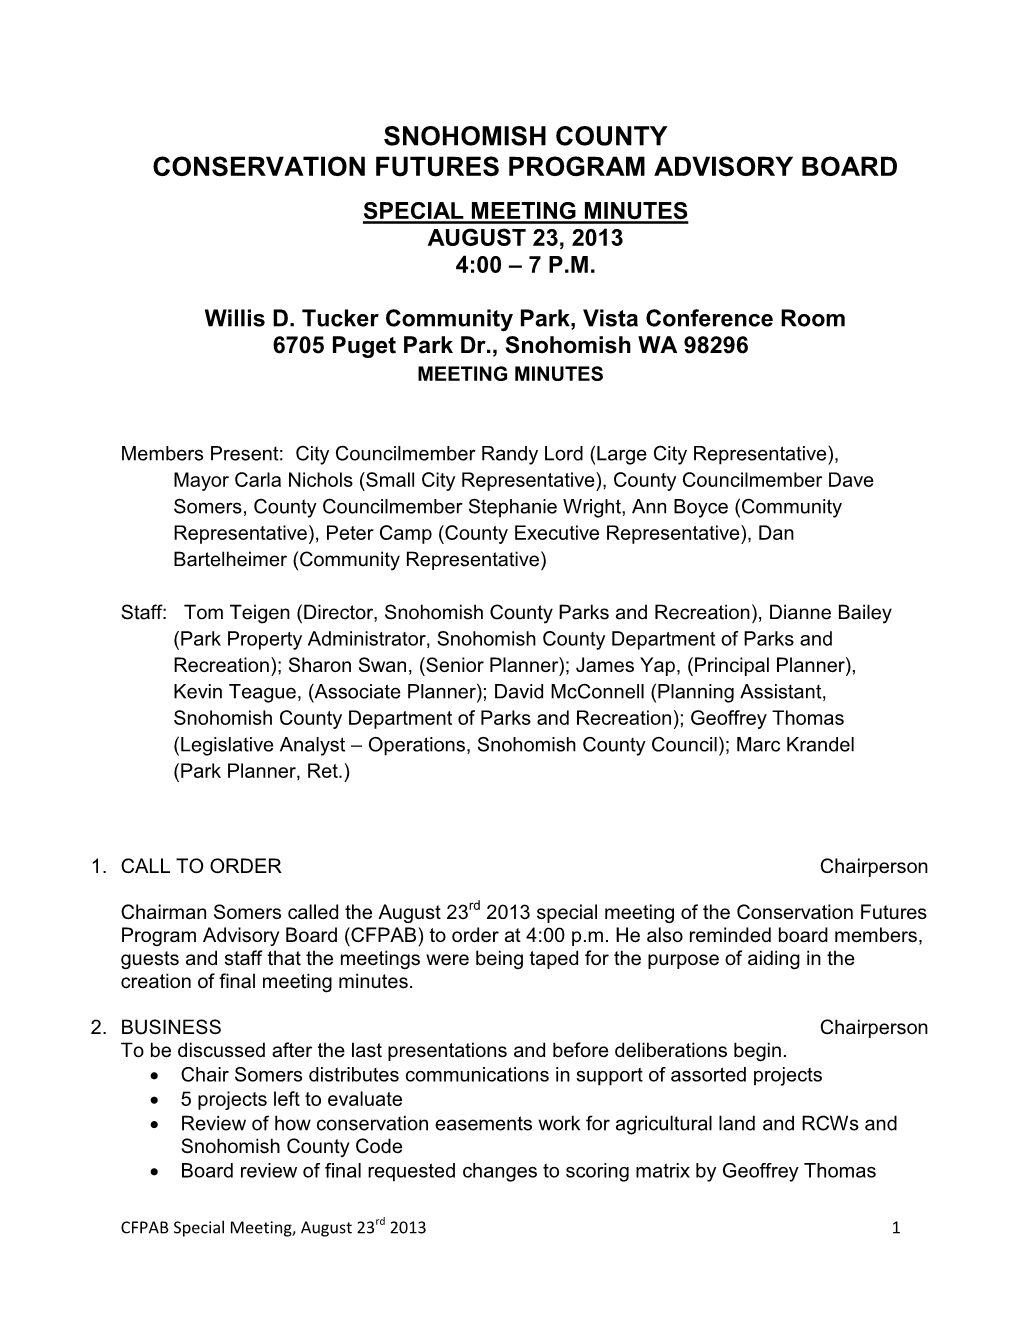 Snohomish County Conservation Futures Program Advisory Board